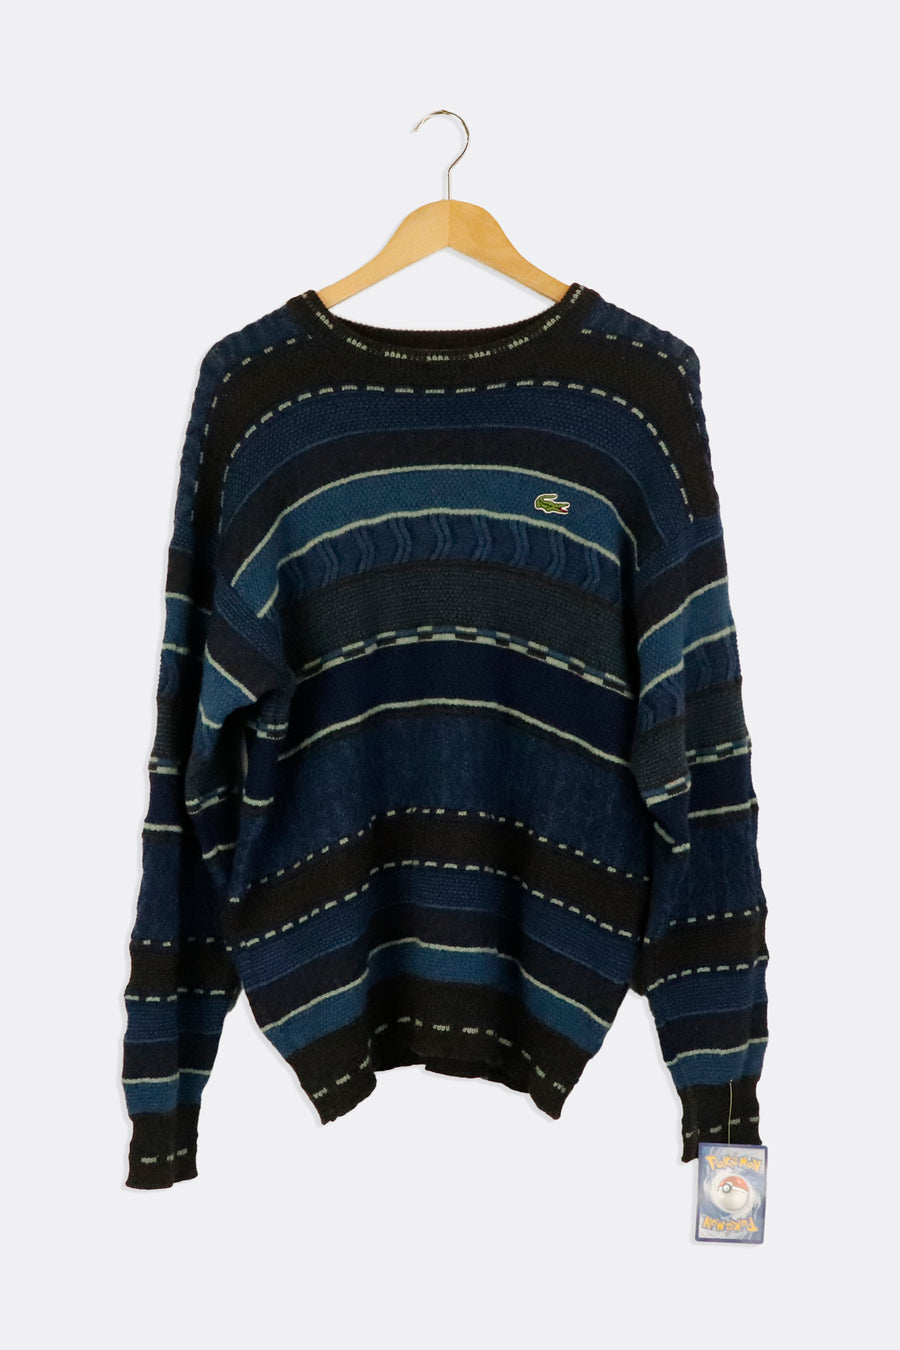 Vintage Lacoste Knit Pullover Patterned Sweatshirt